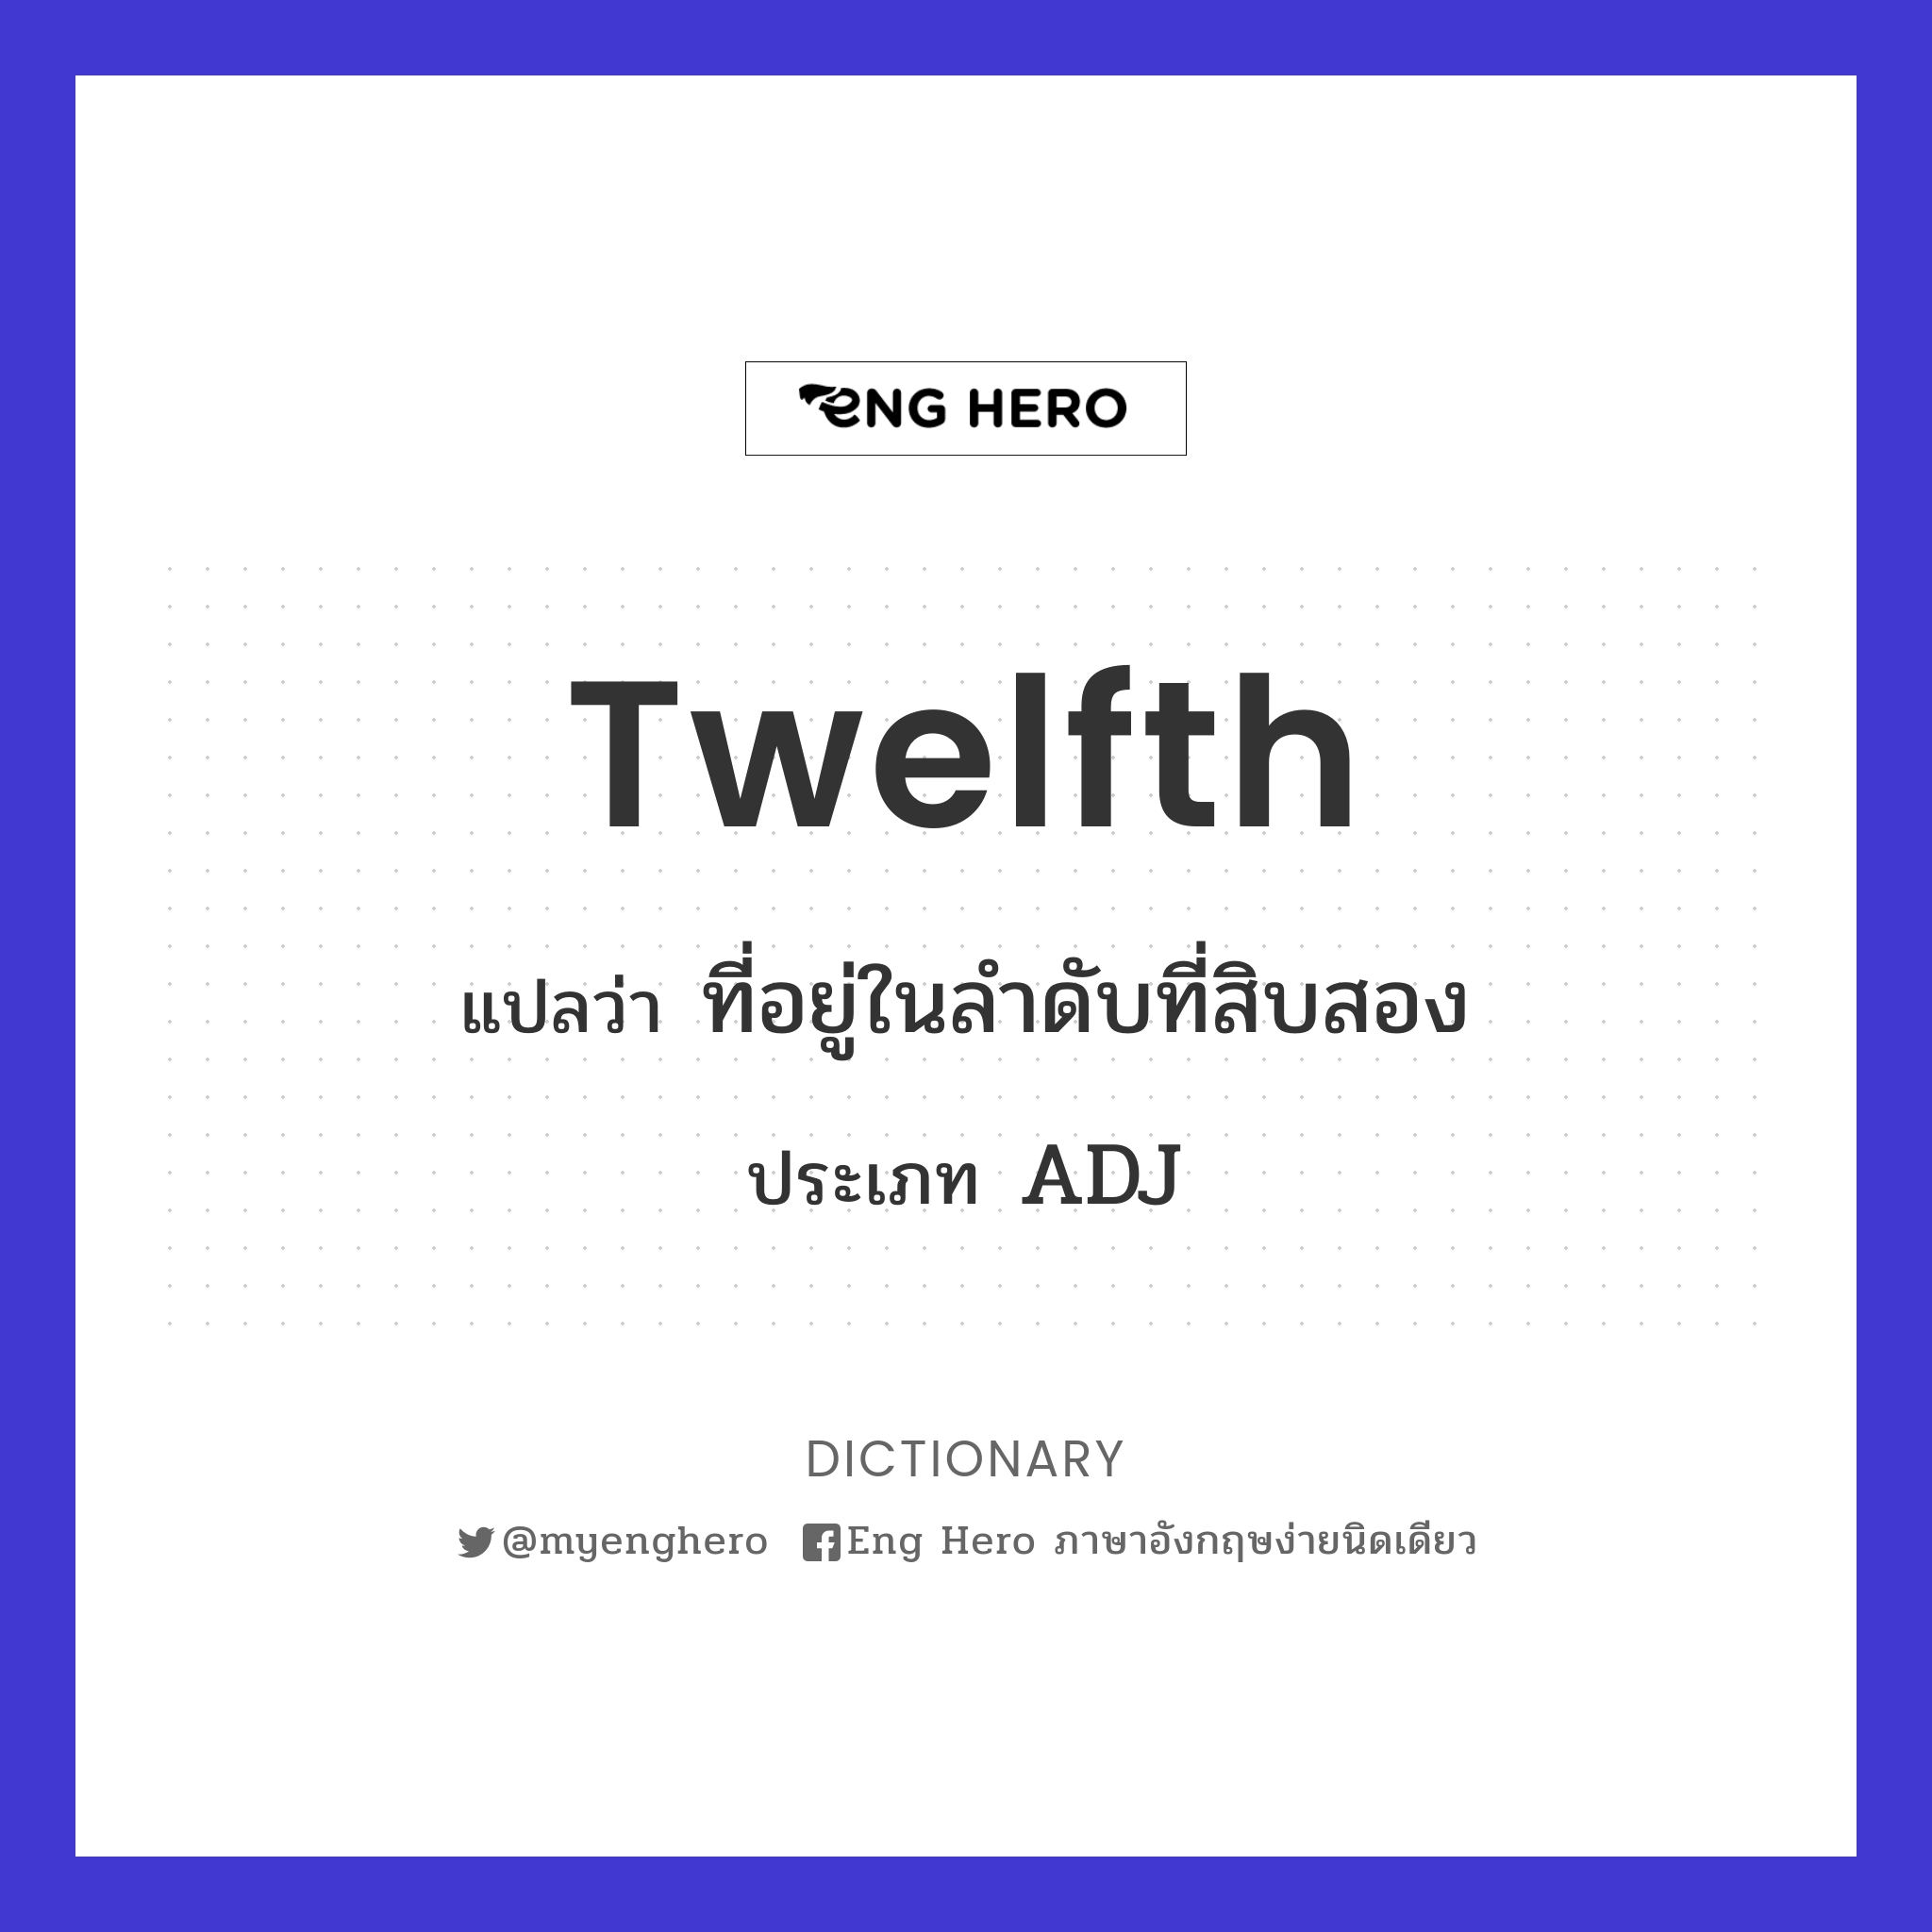 twelfth